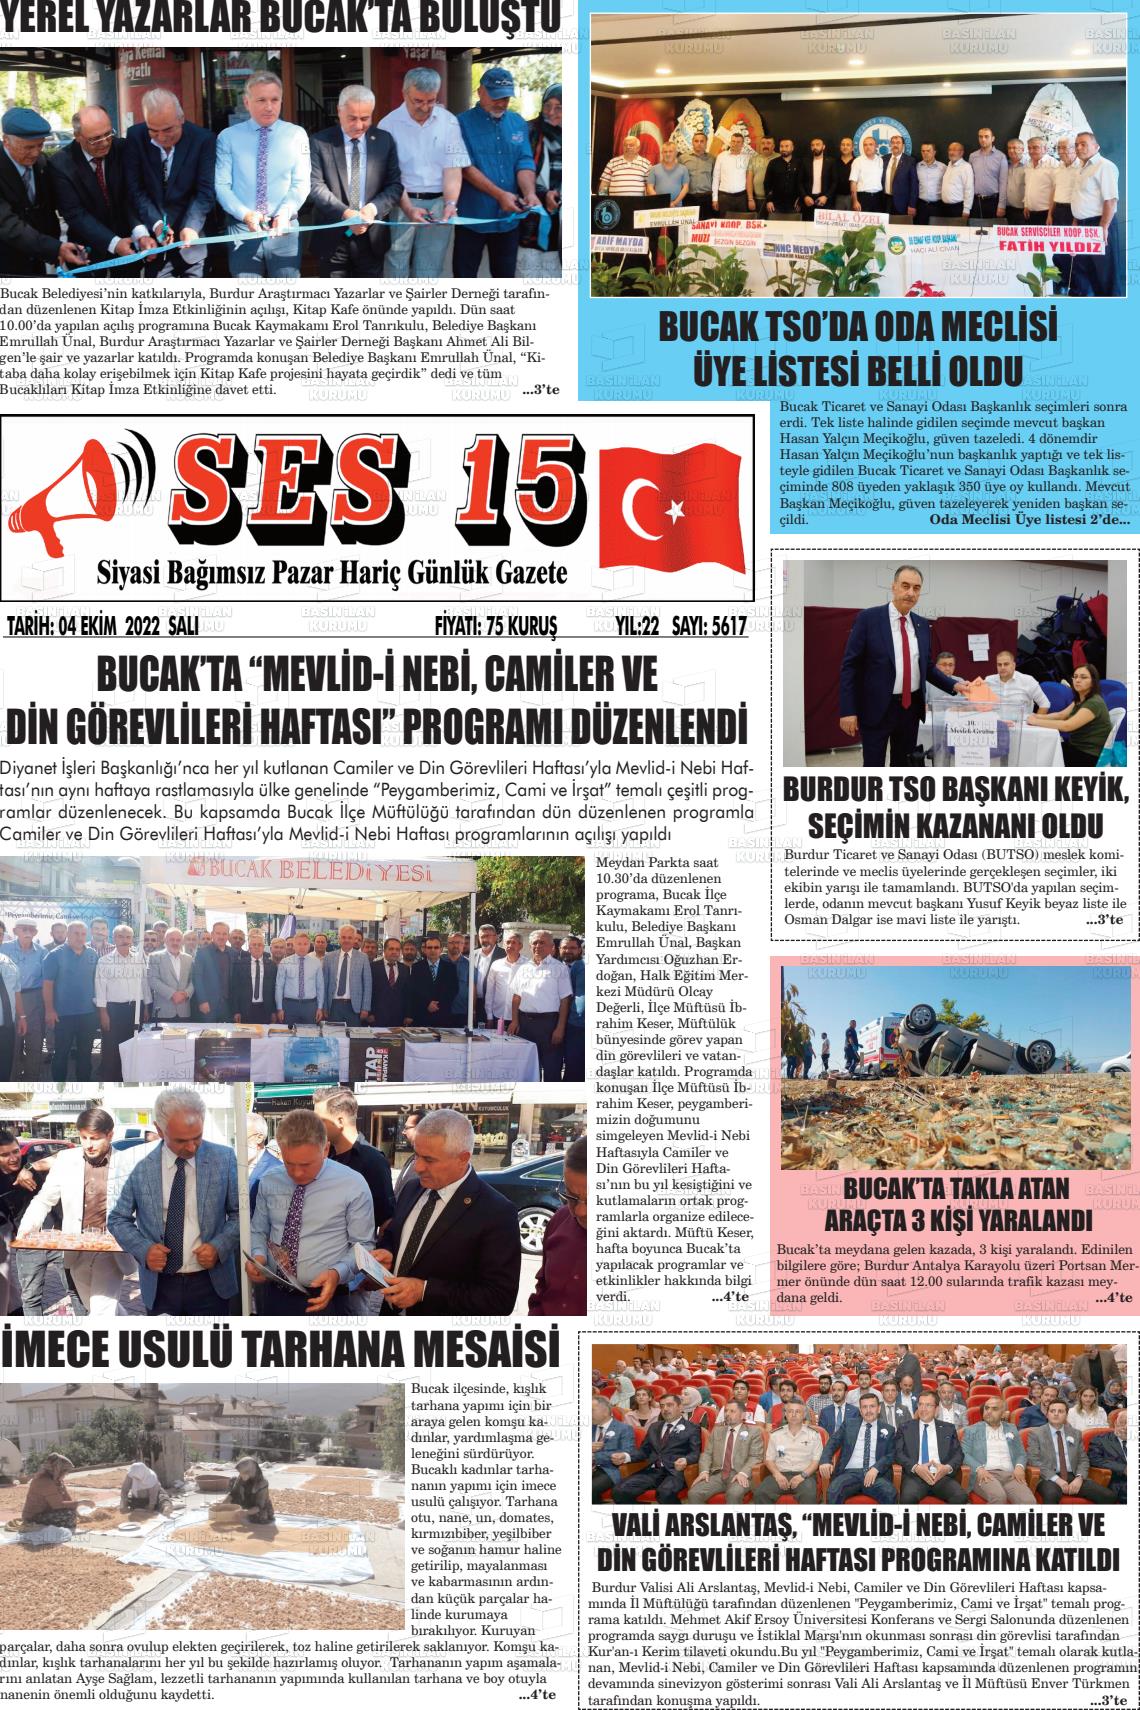 04 Ekim 2022 Ses 15 Gazete Manşeti